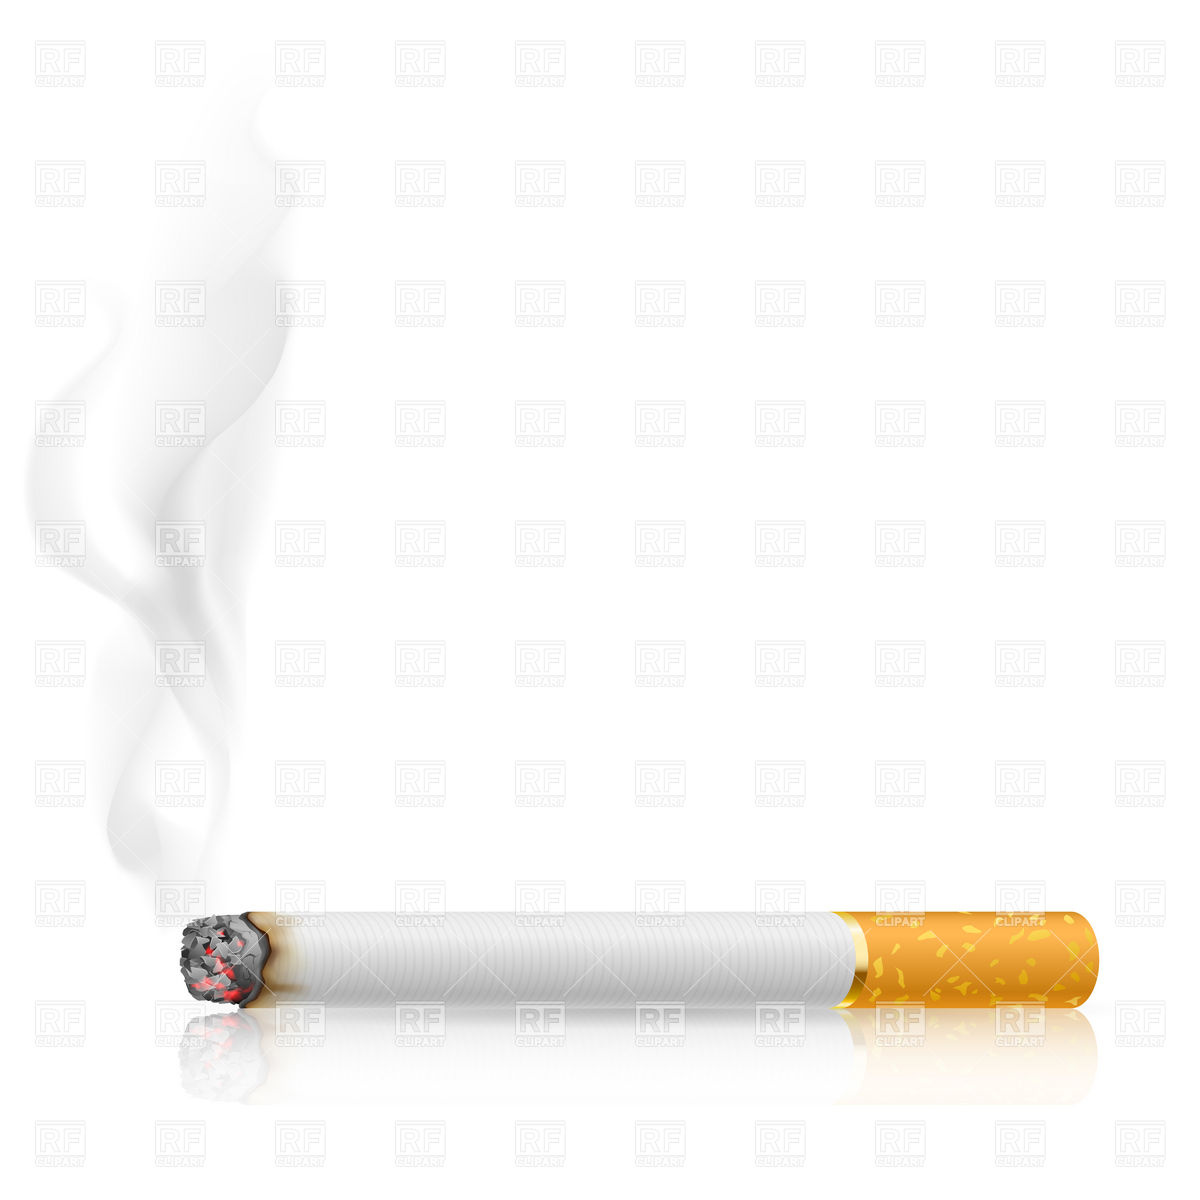 Smoking And Burning Cigarette 7372 Healthcare Medical Download